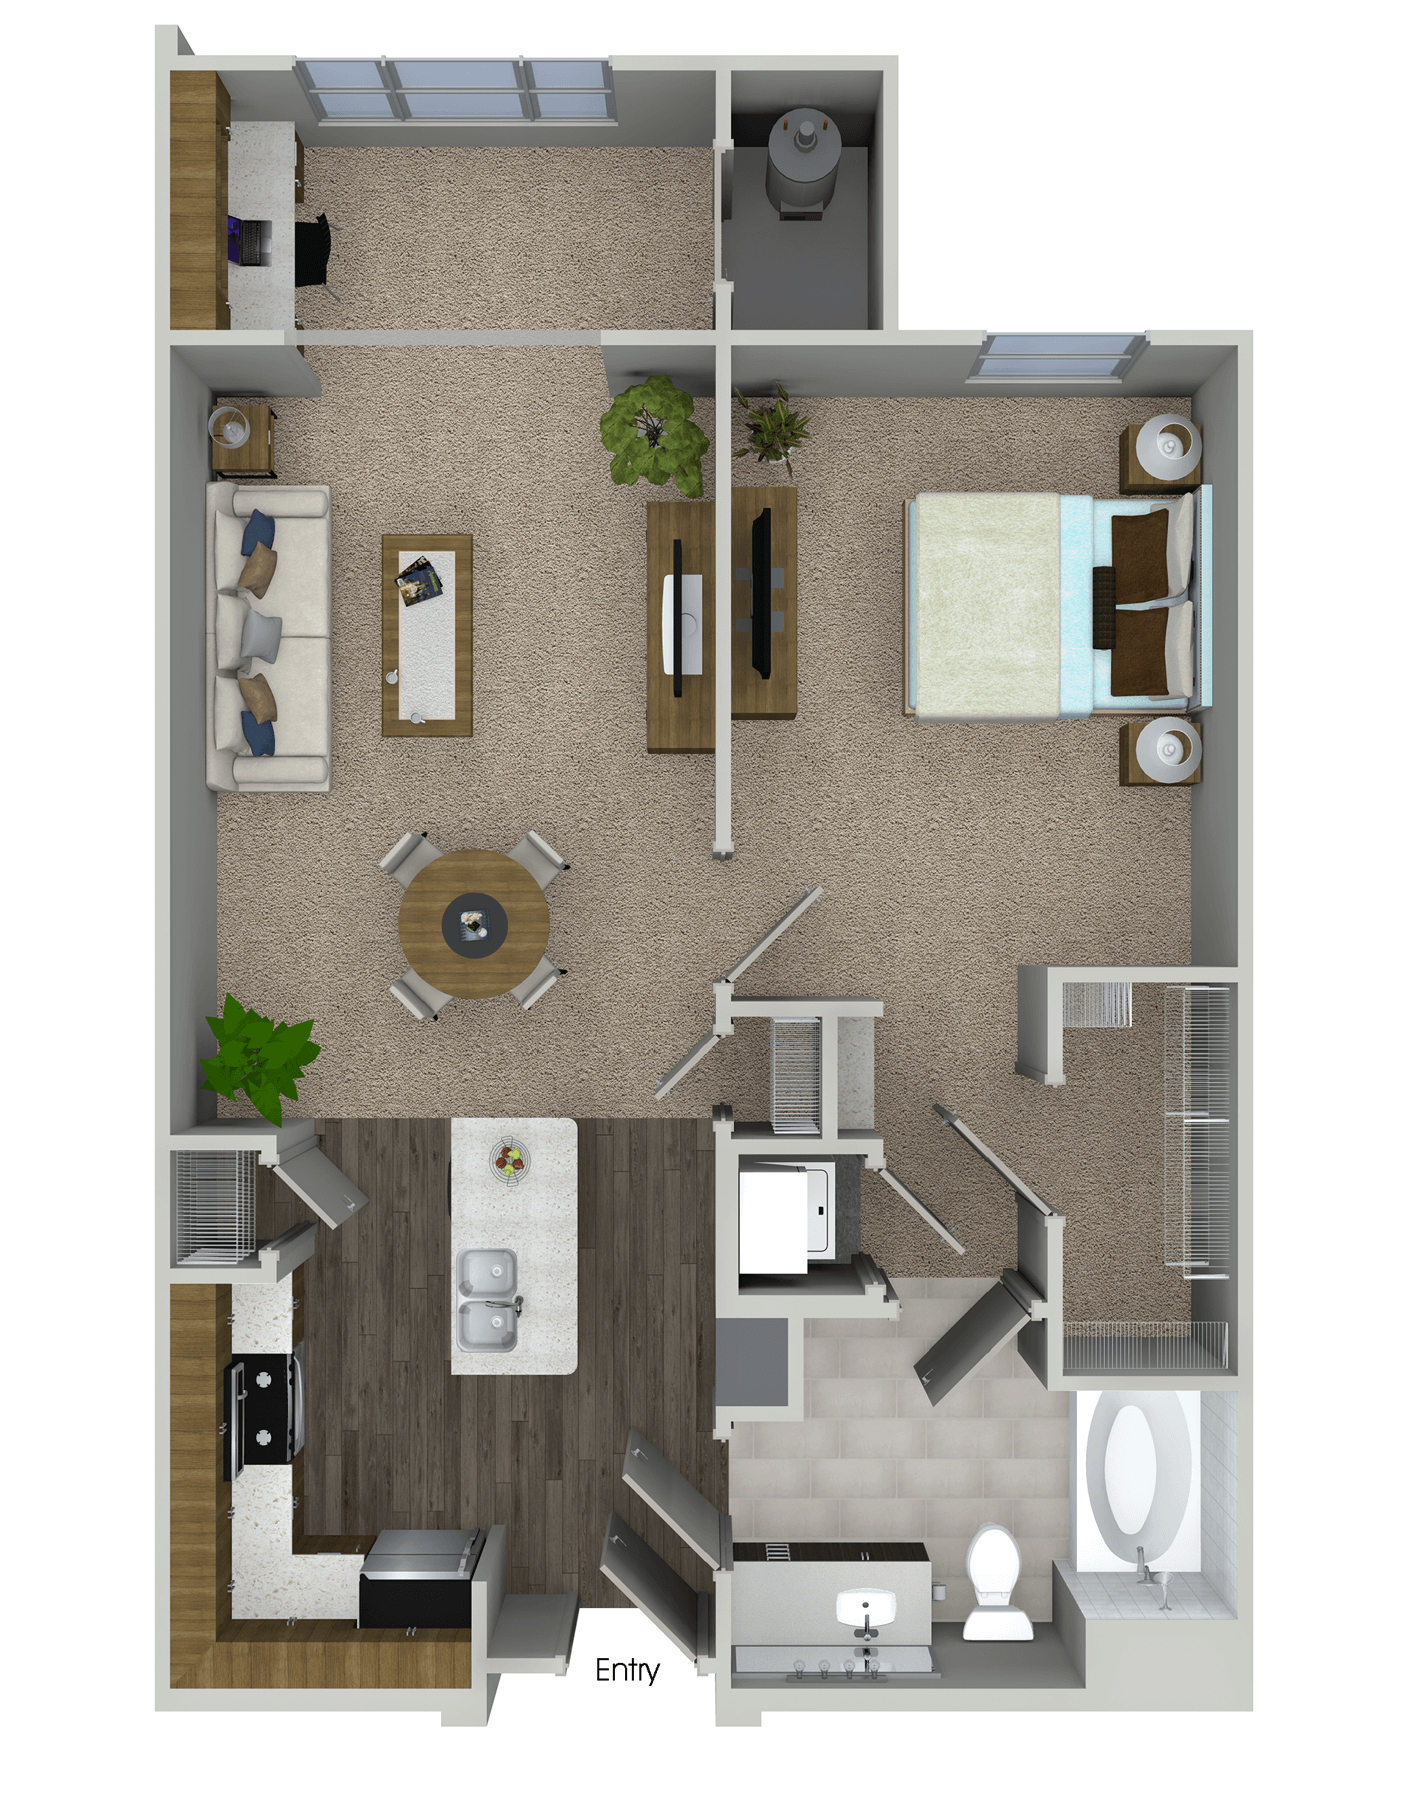 Floorplan for Apartment #1410, 1 bedroom unit at Halstead Marlborough